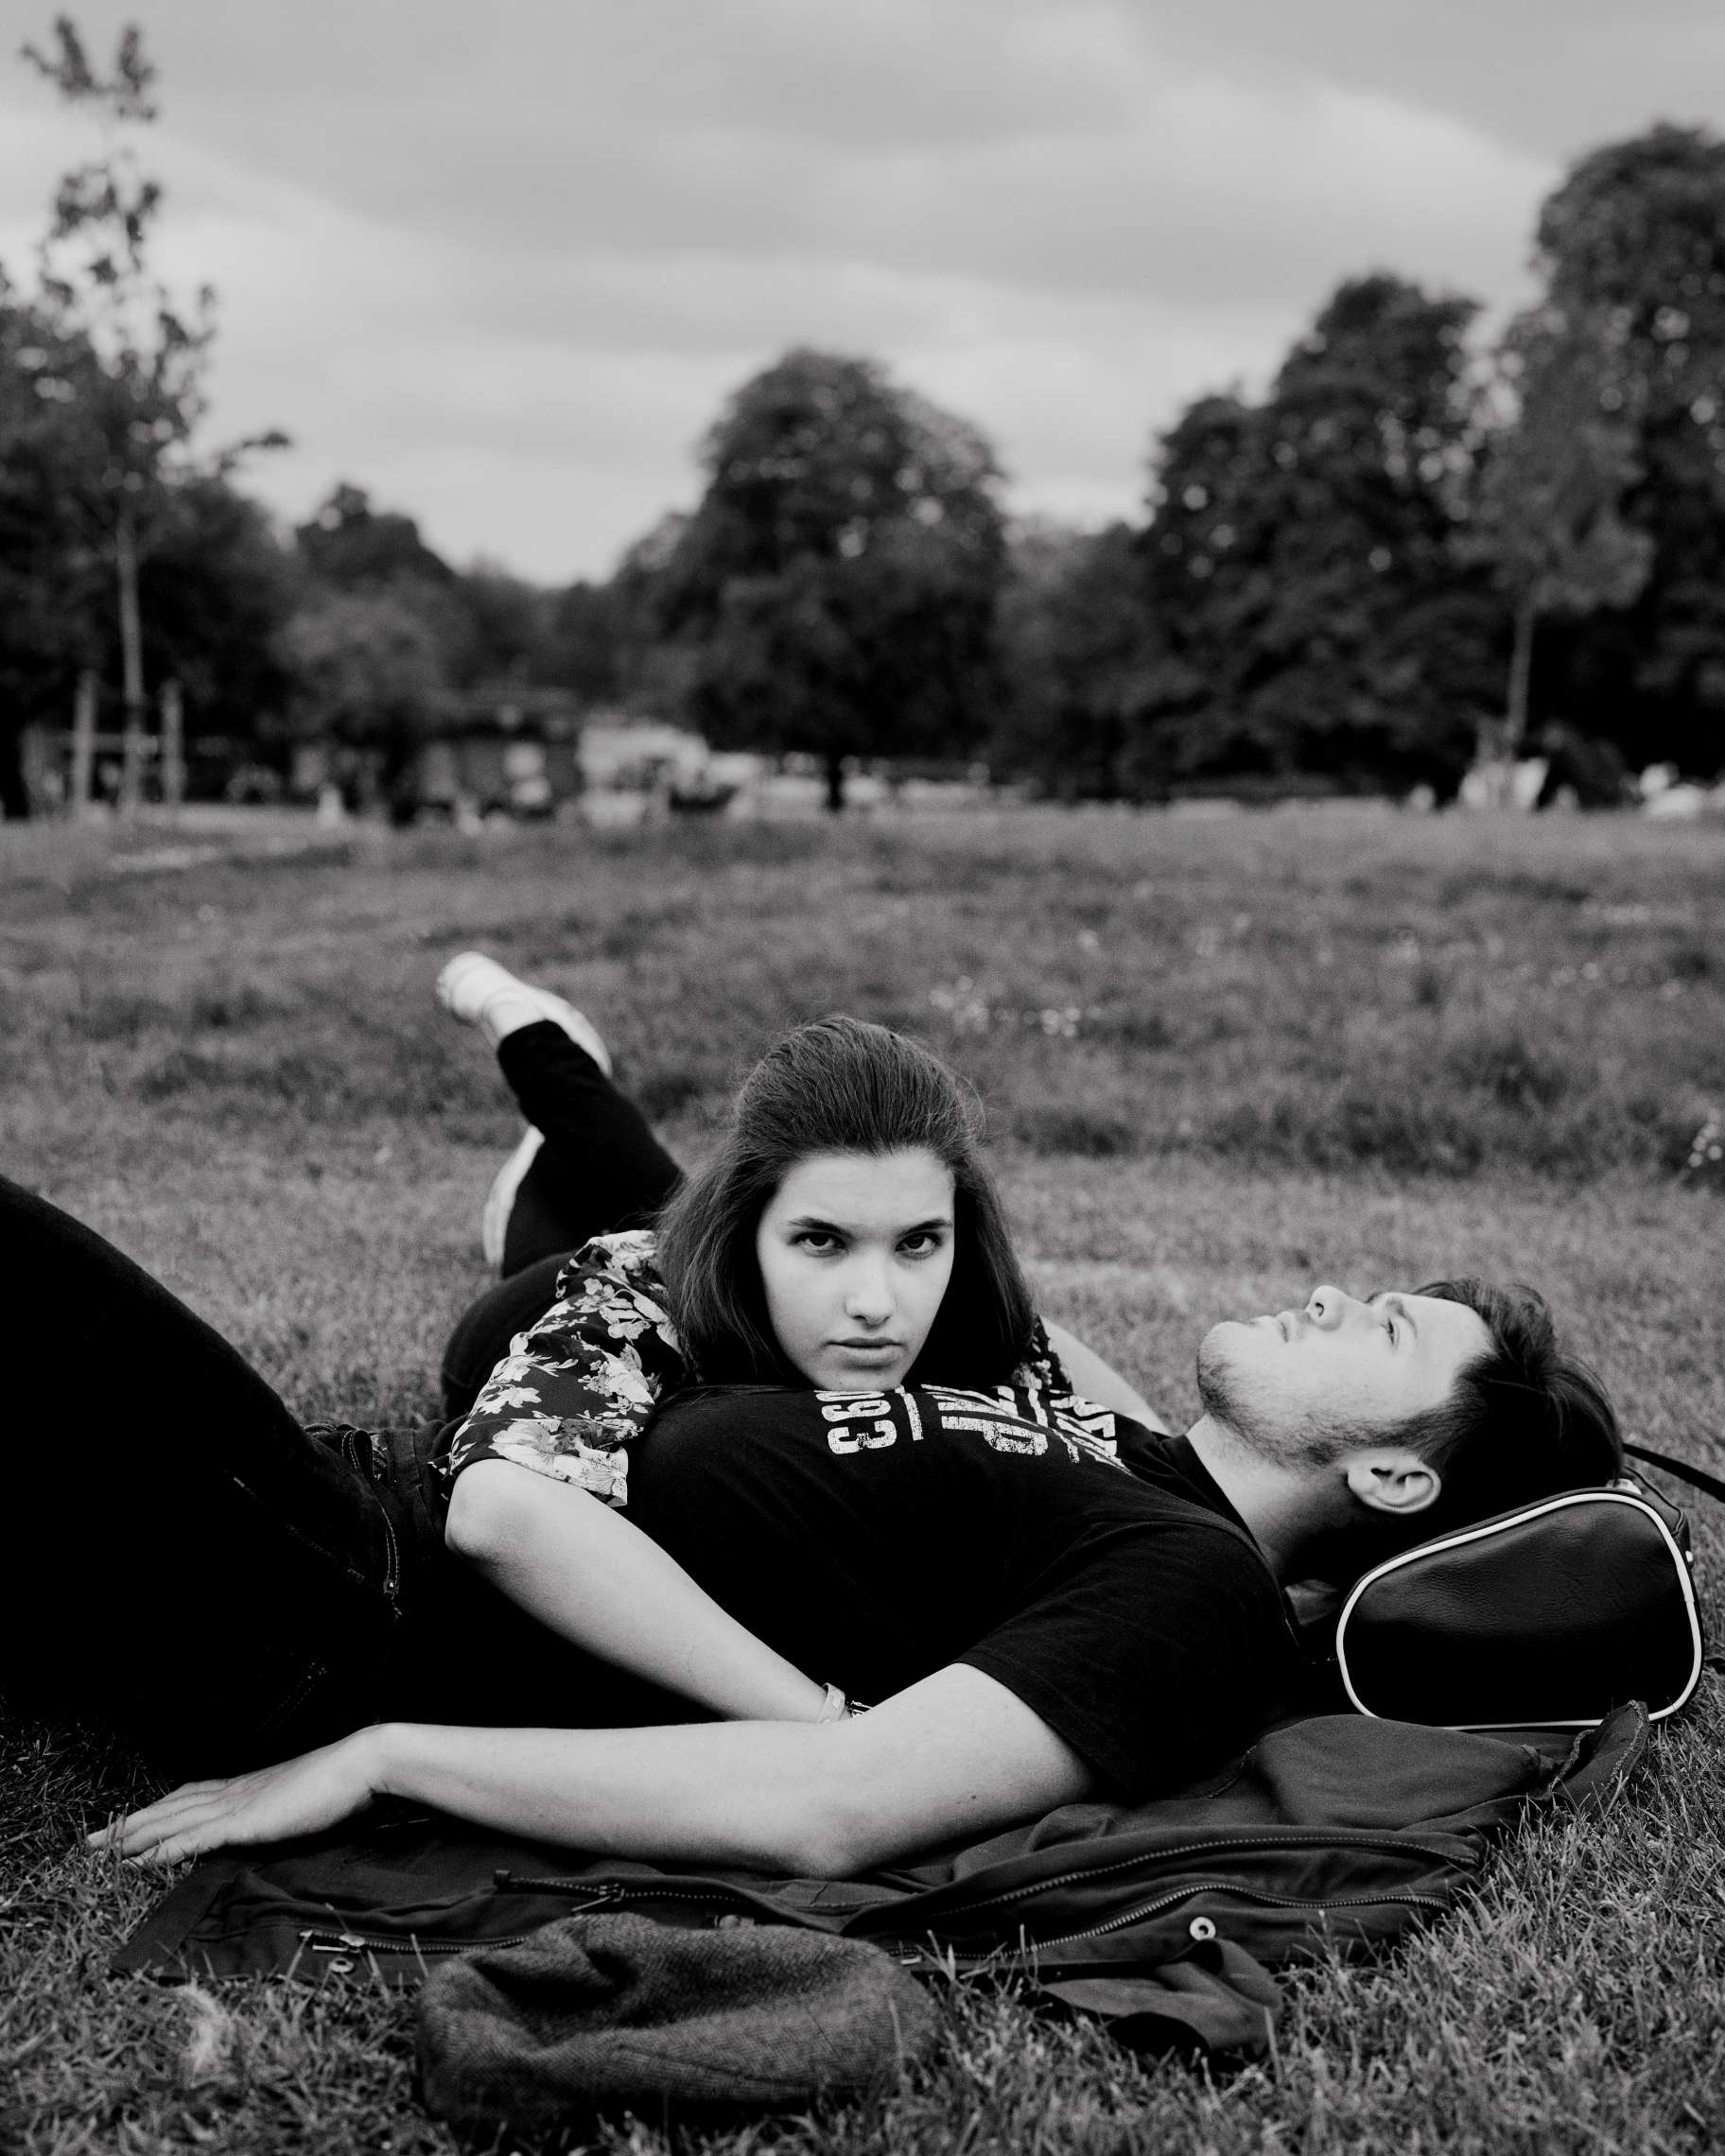 10717 05. Portrett 25.05.2015 Europas ungdom Fra portrettserien "Europas ungdom", et prosjekt om unge europeere. Natalia Garcia (16) og Louis Bristow (18), London, Storbritannia.